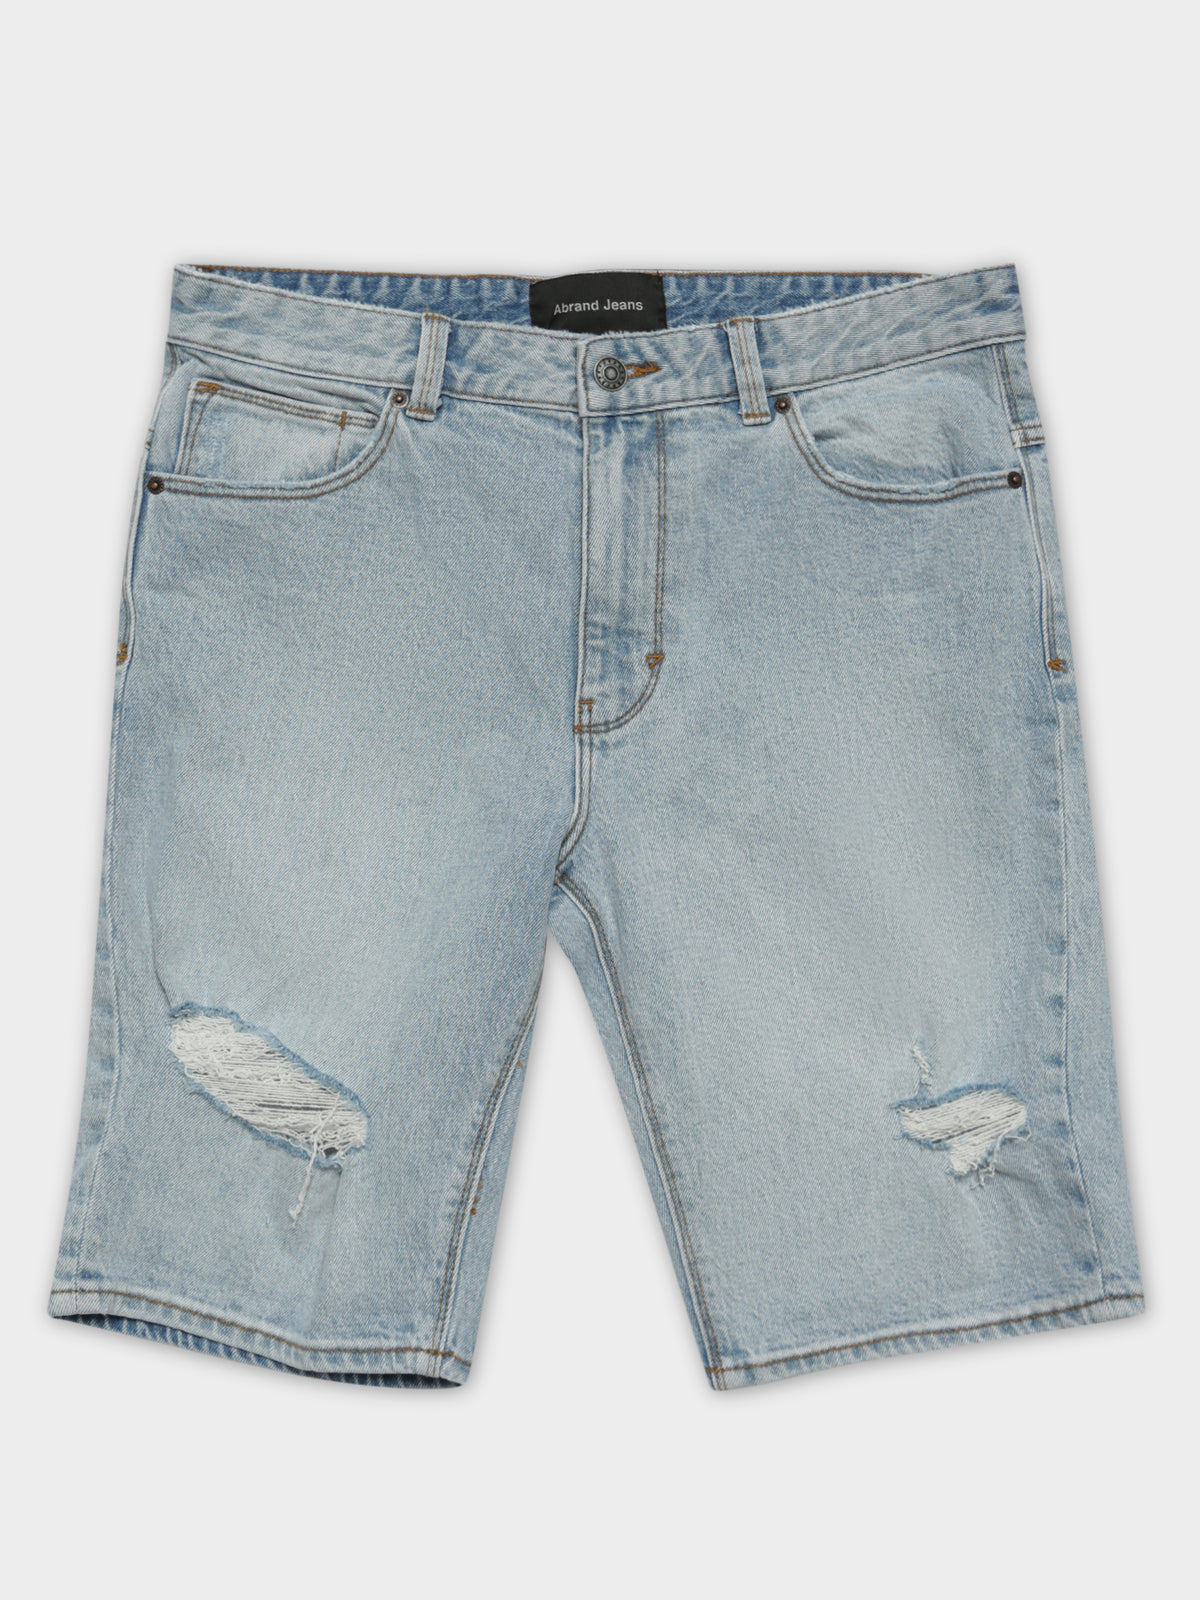 A Dropped Slim Shorts in Hunter Blue Denim